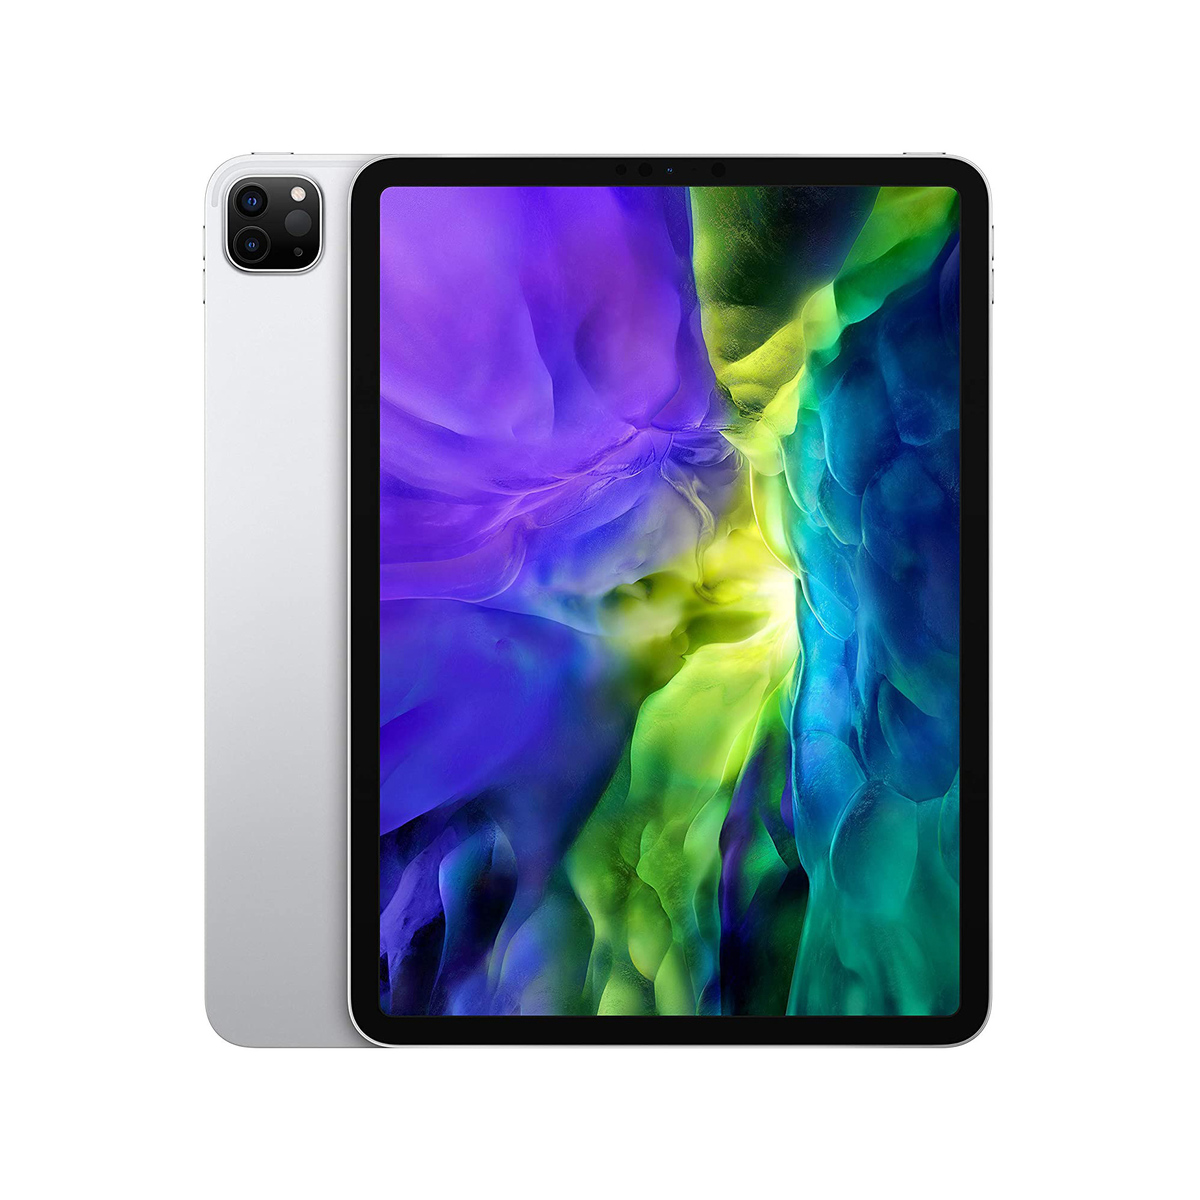 Apple iPad Pro (11-inch, Wi-Fi, 128GB) - Silver(2nd Generation)